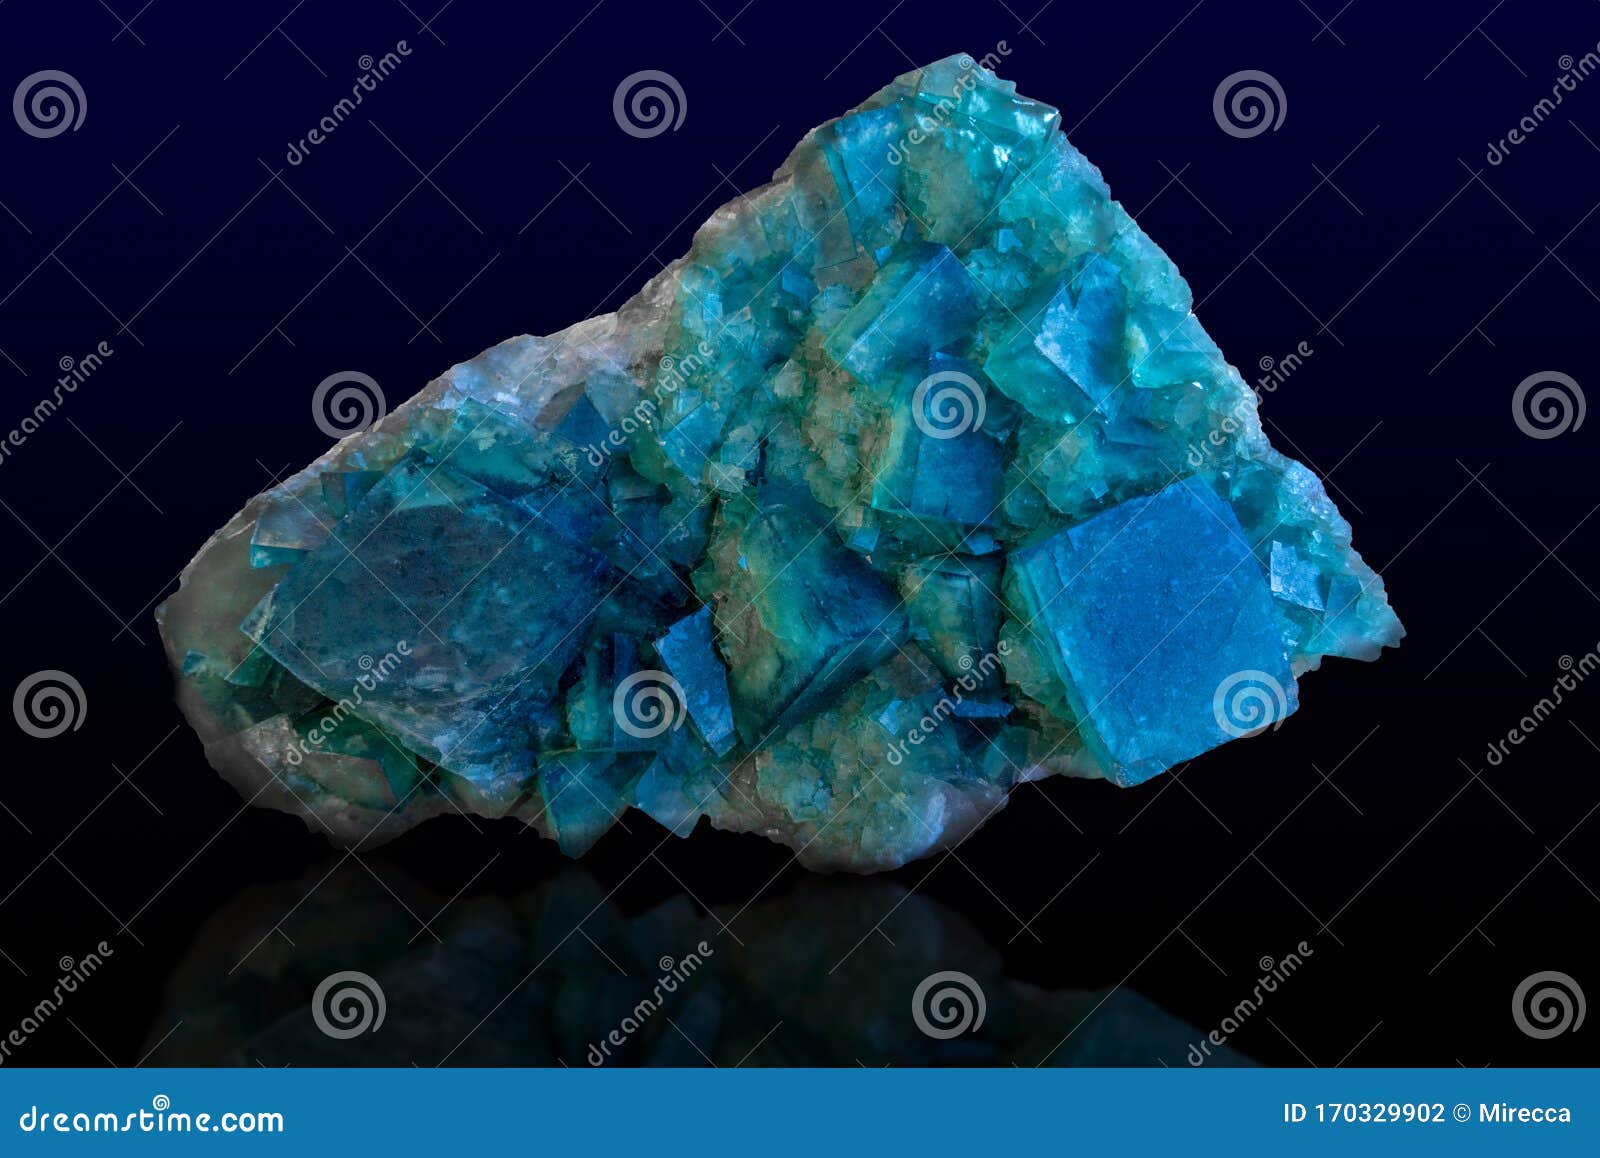 rock of blue calcite mineral on dark background.